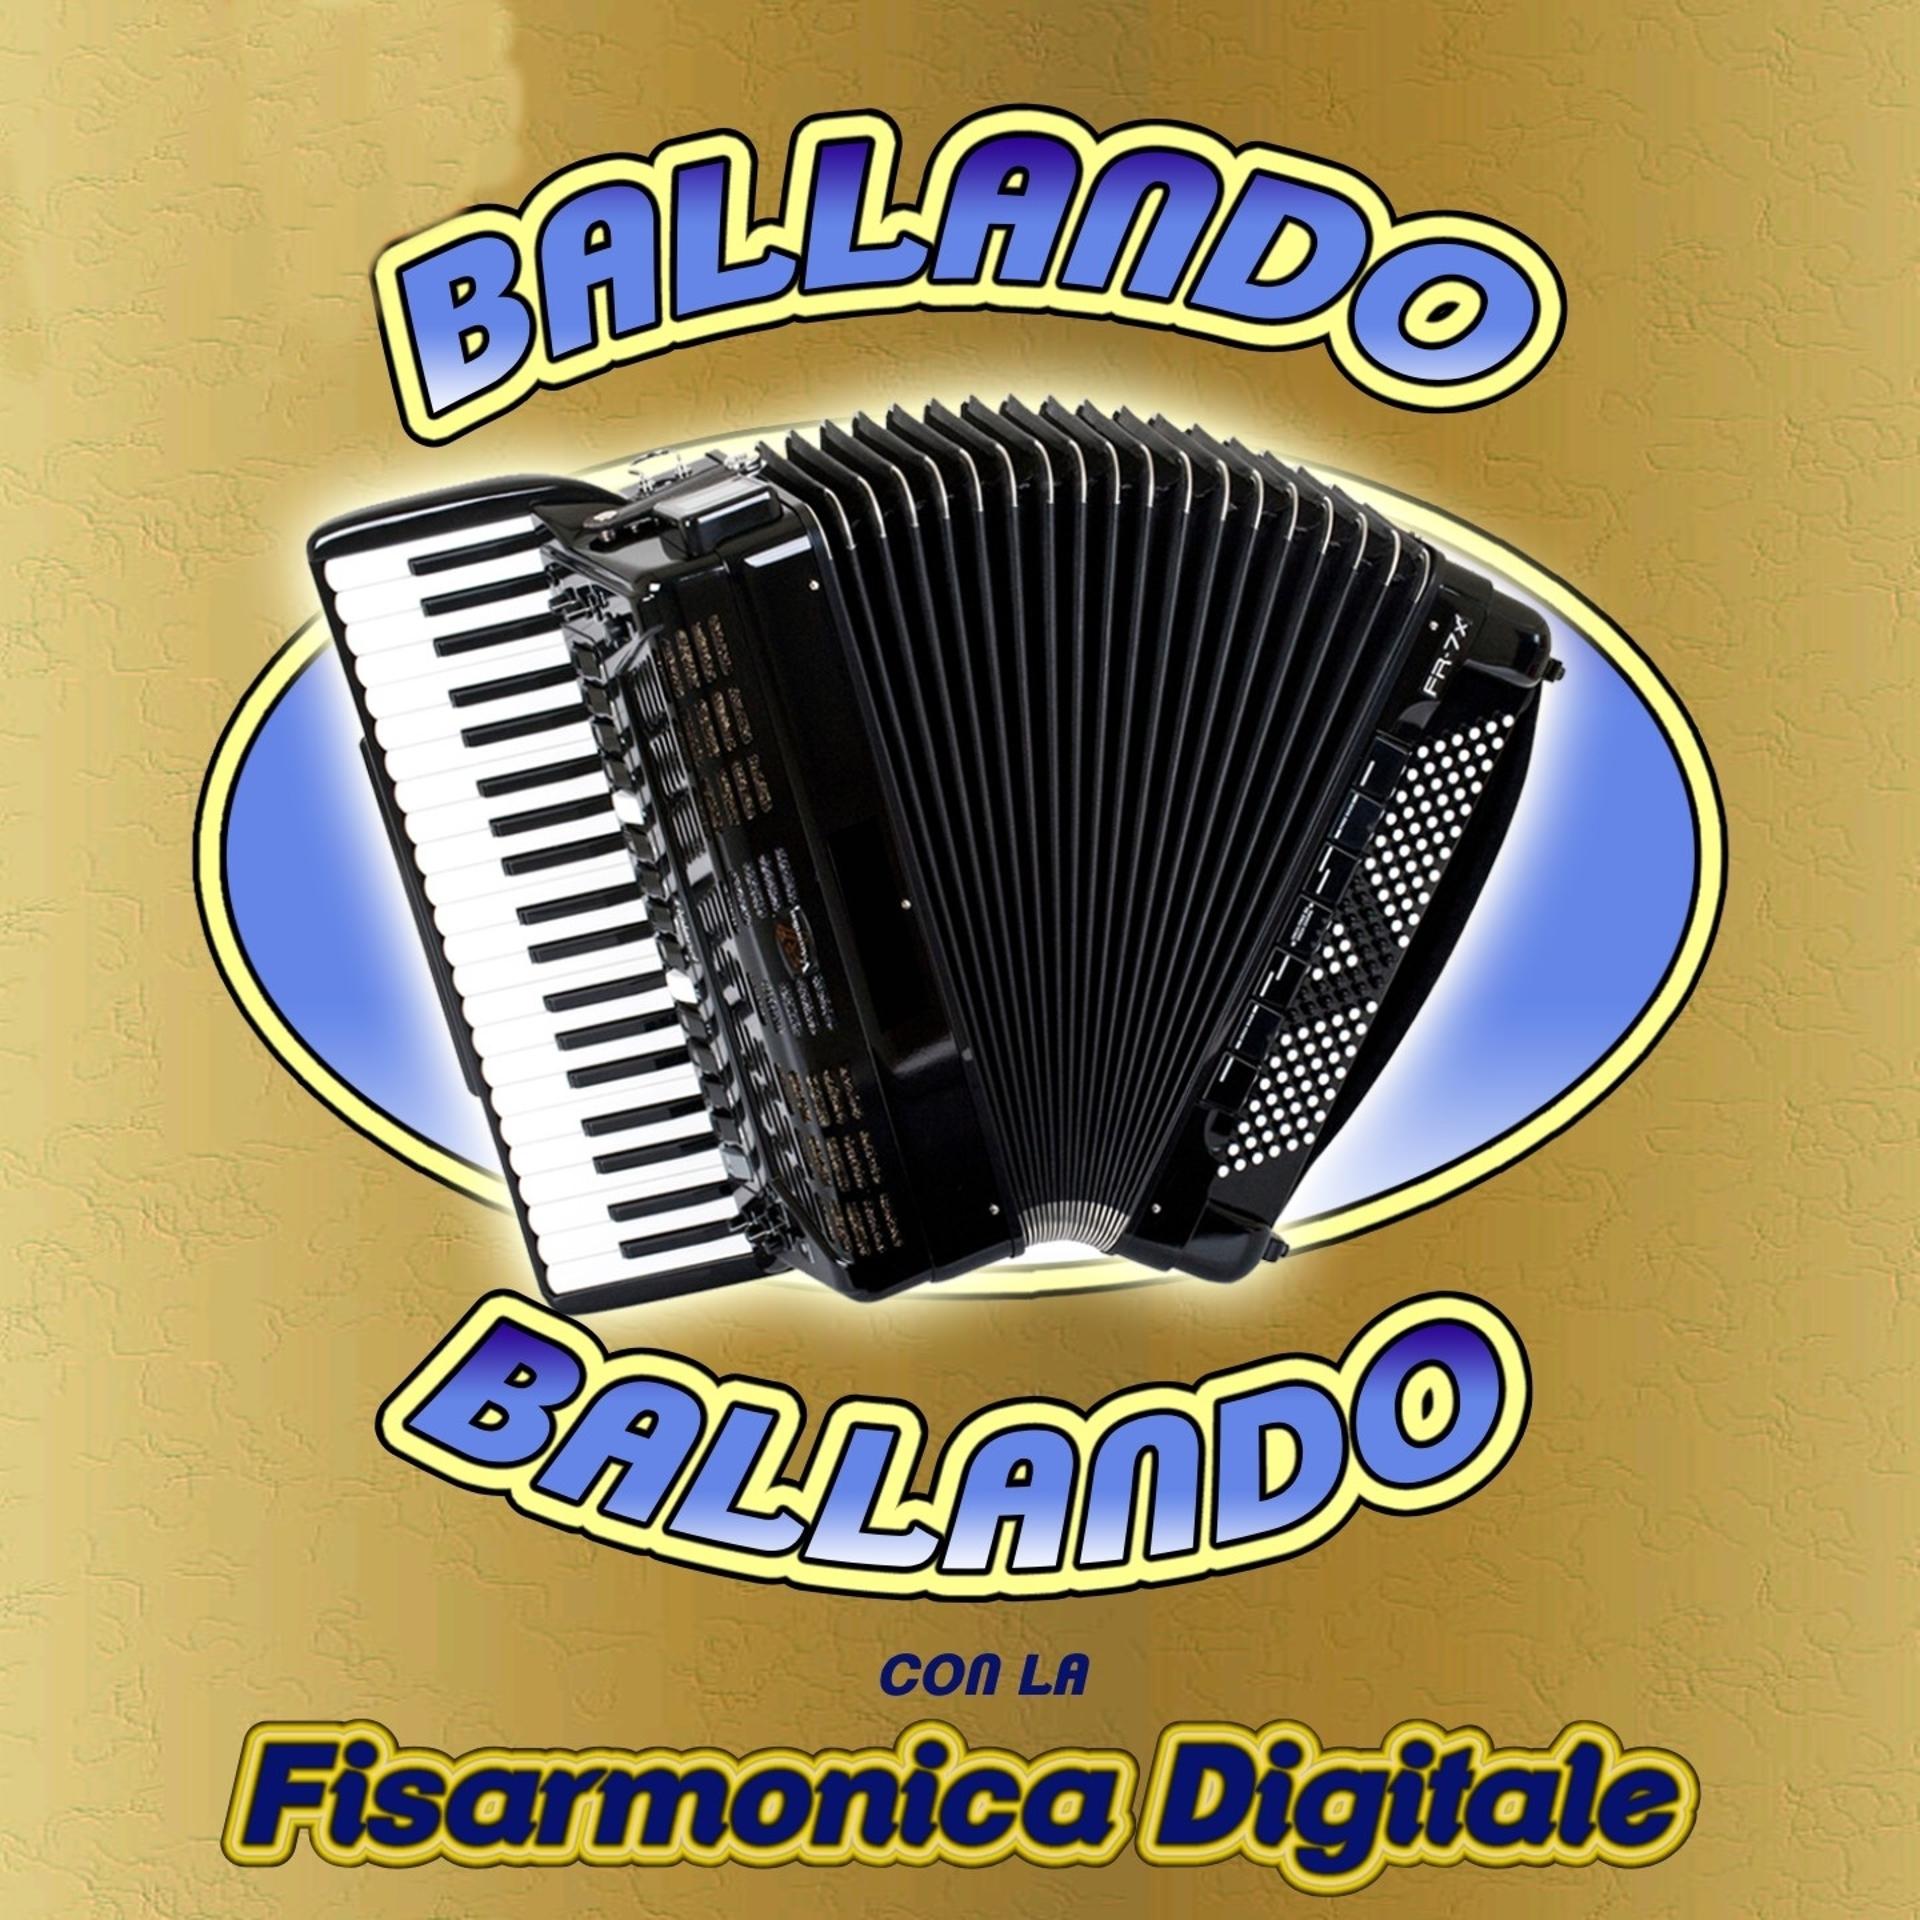 Постер альбома Ballando ballando con la fisarmonica digitale